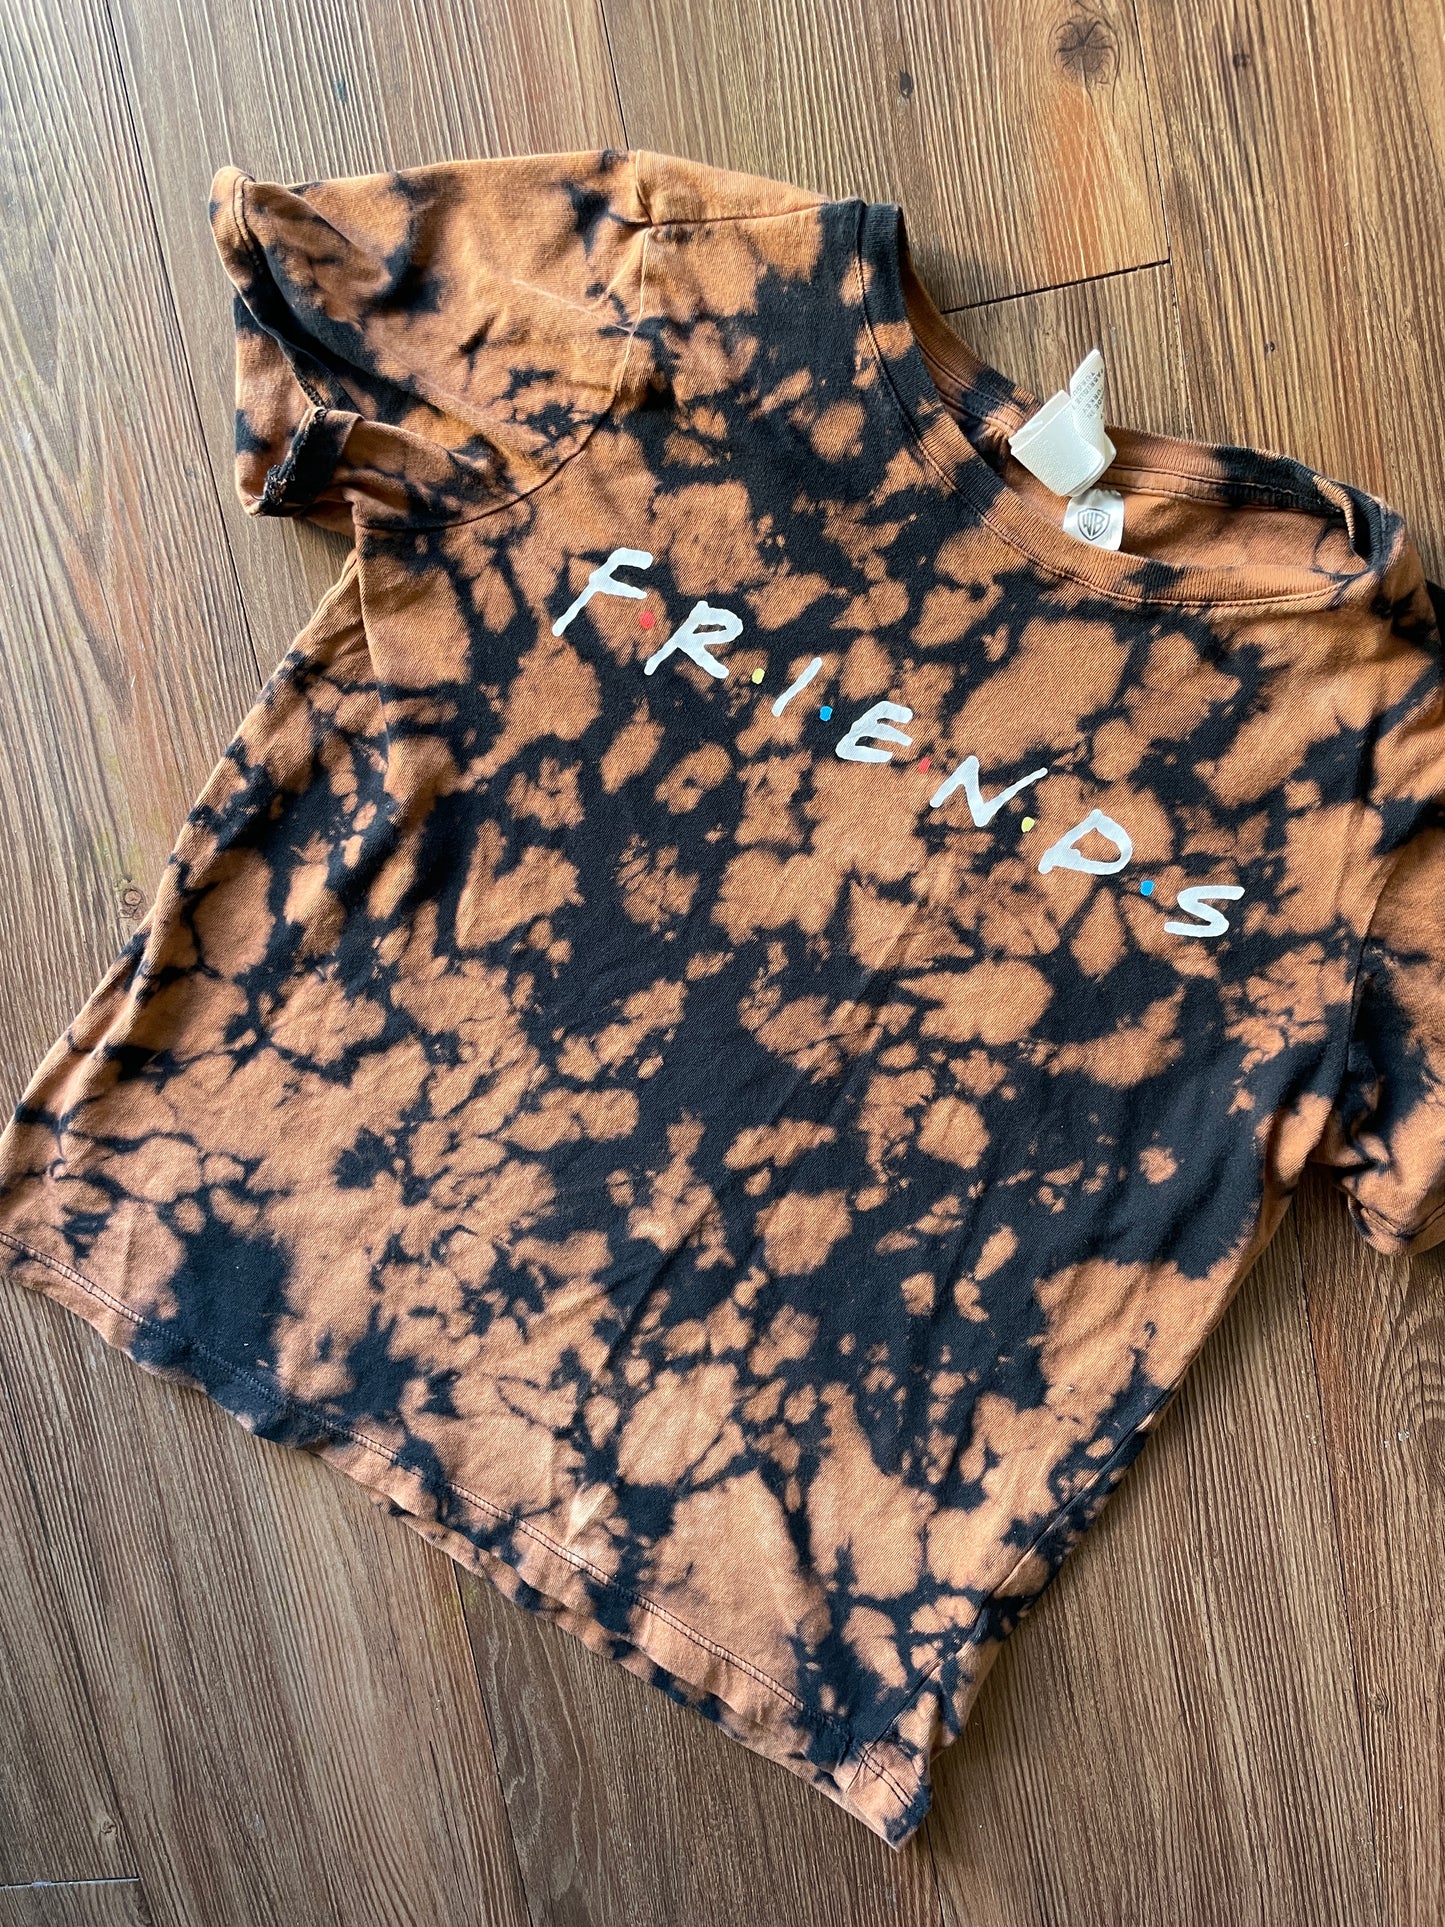 SMALL Women’s Friends Handmade Acid Dye T-Shirt | One-Of-a-Kind Black and Bleach Short Sleeve